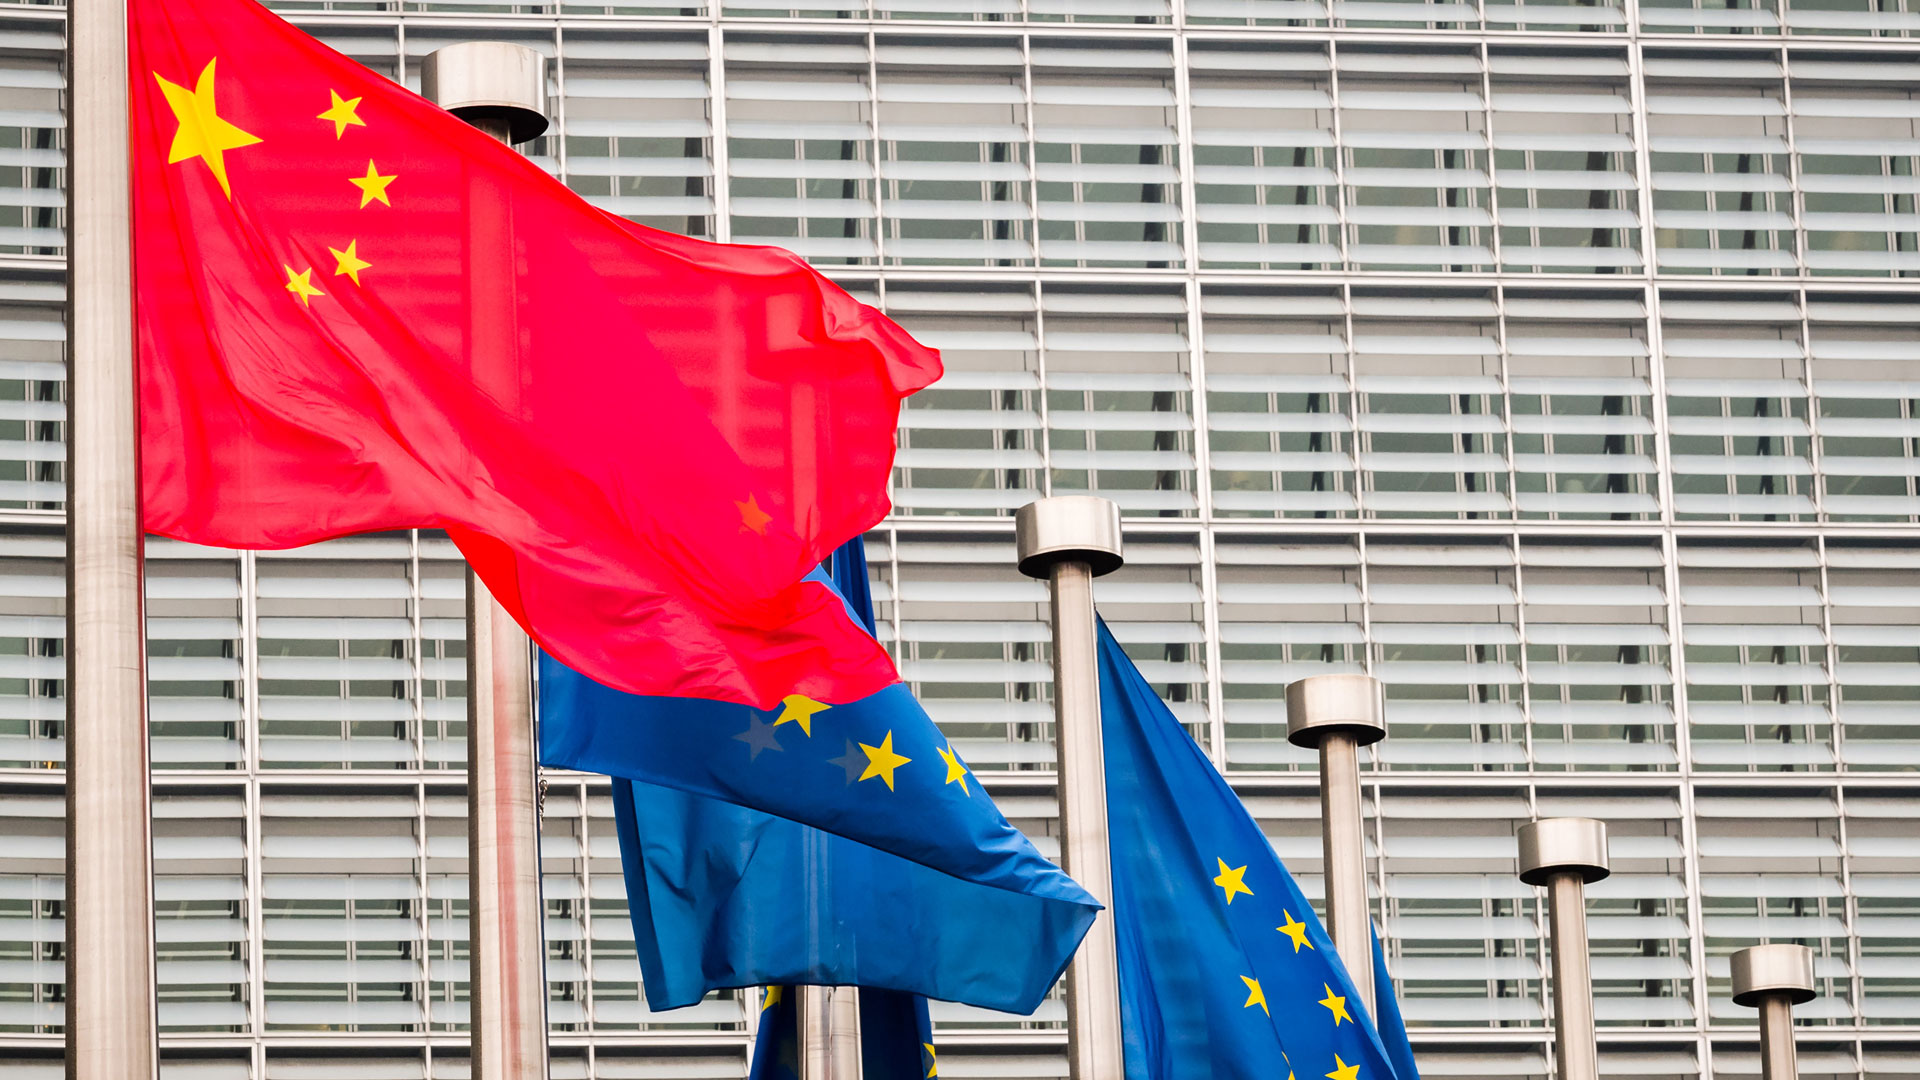 China's flag flying at European Parliament